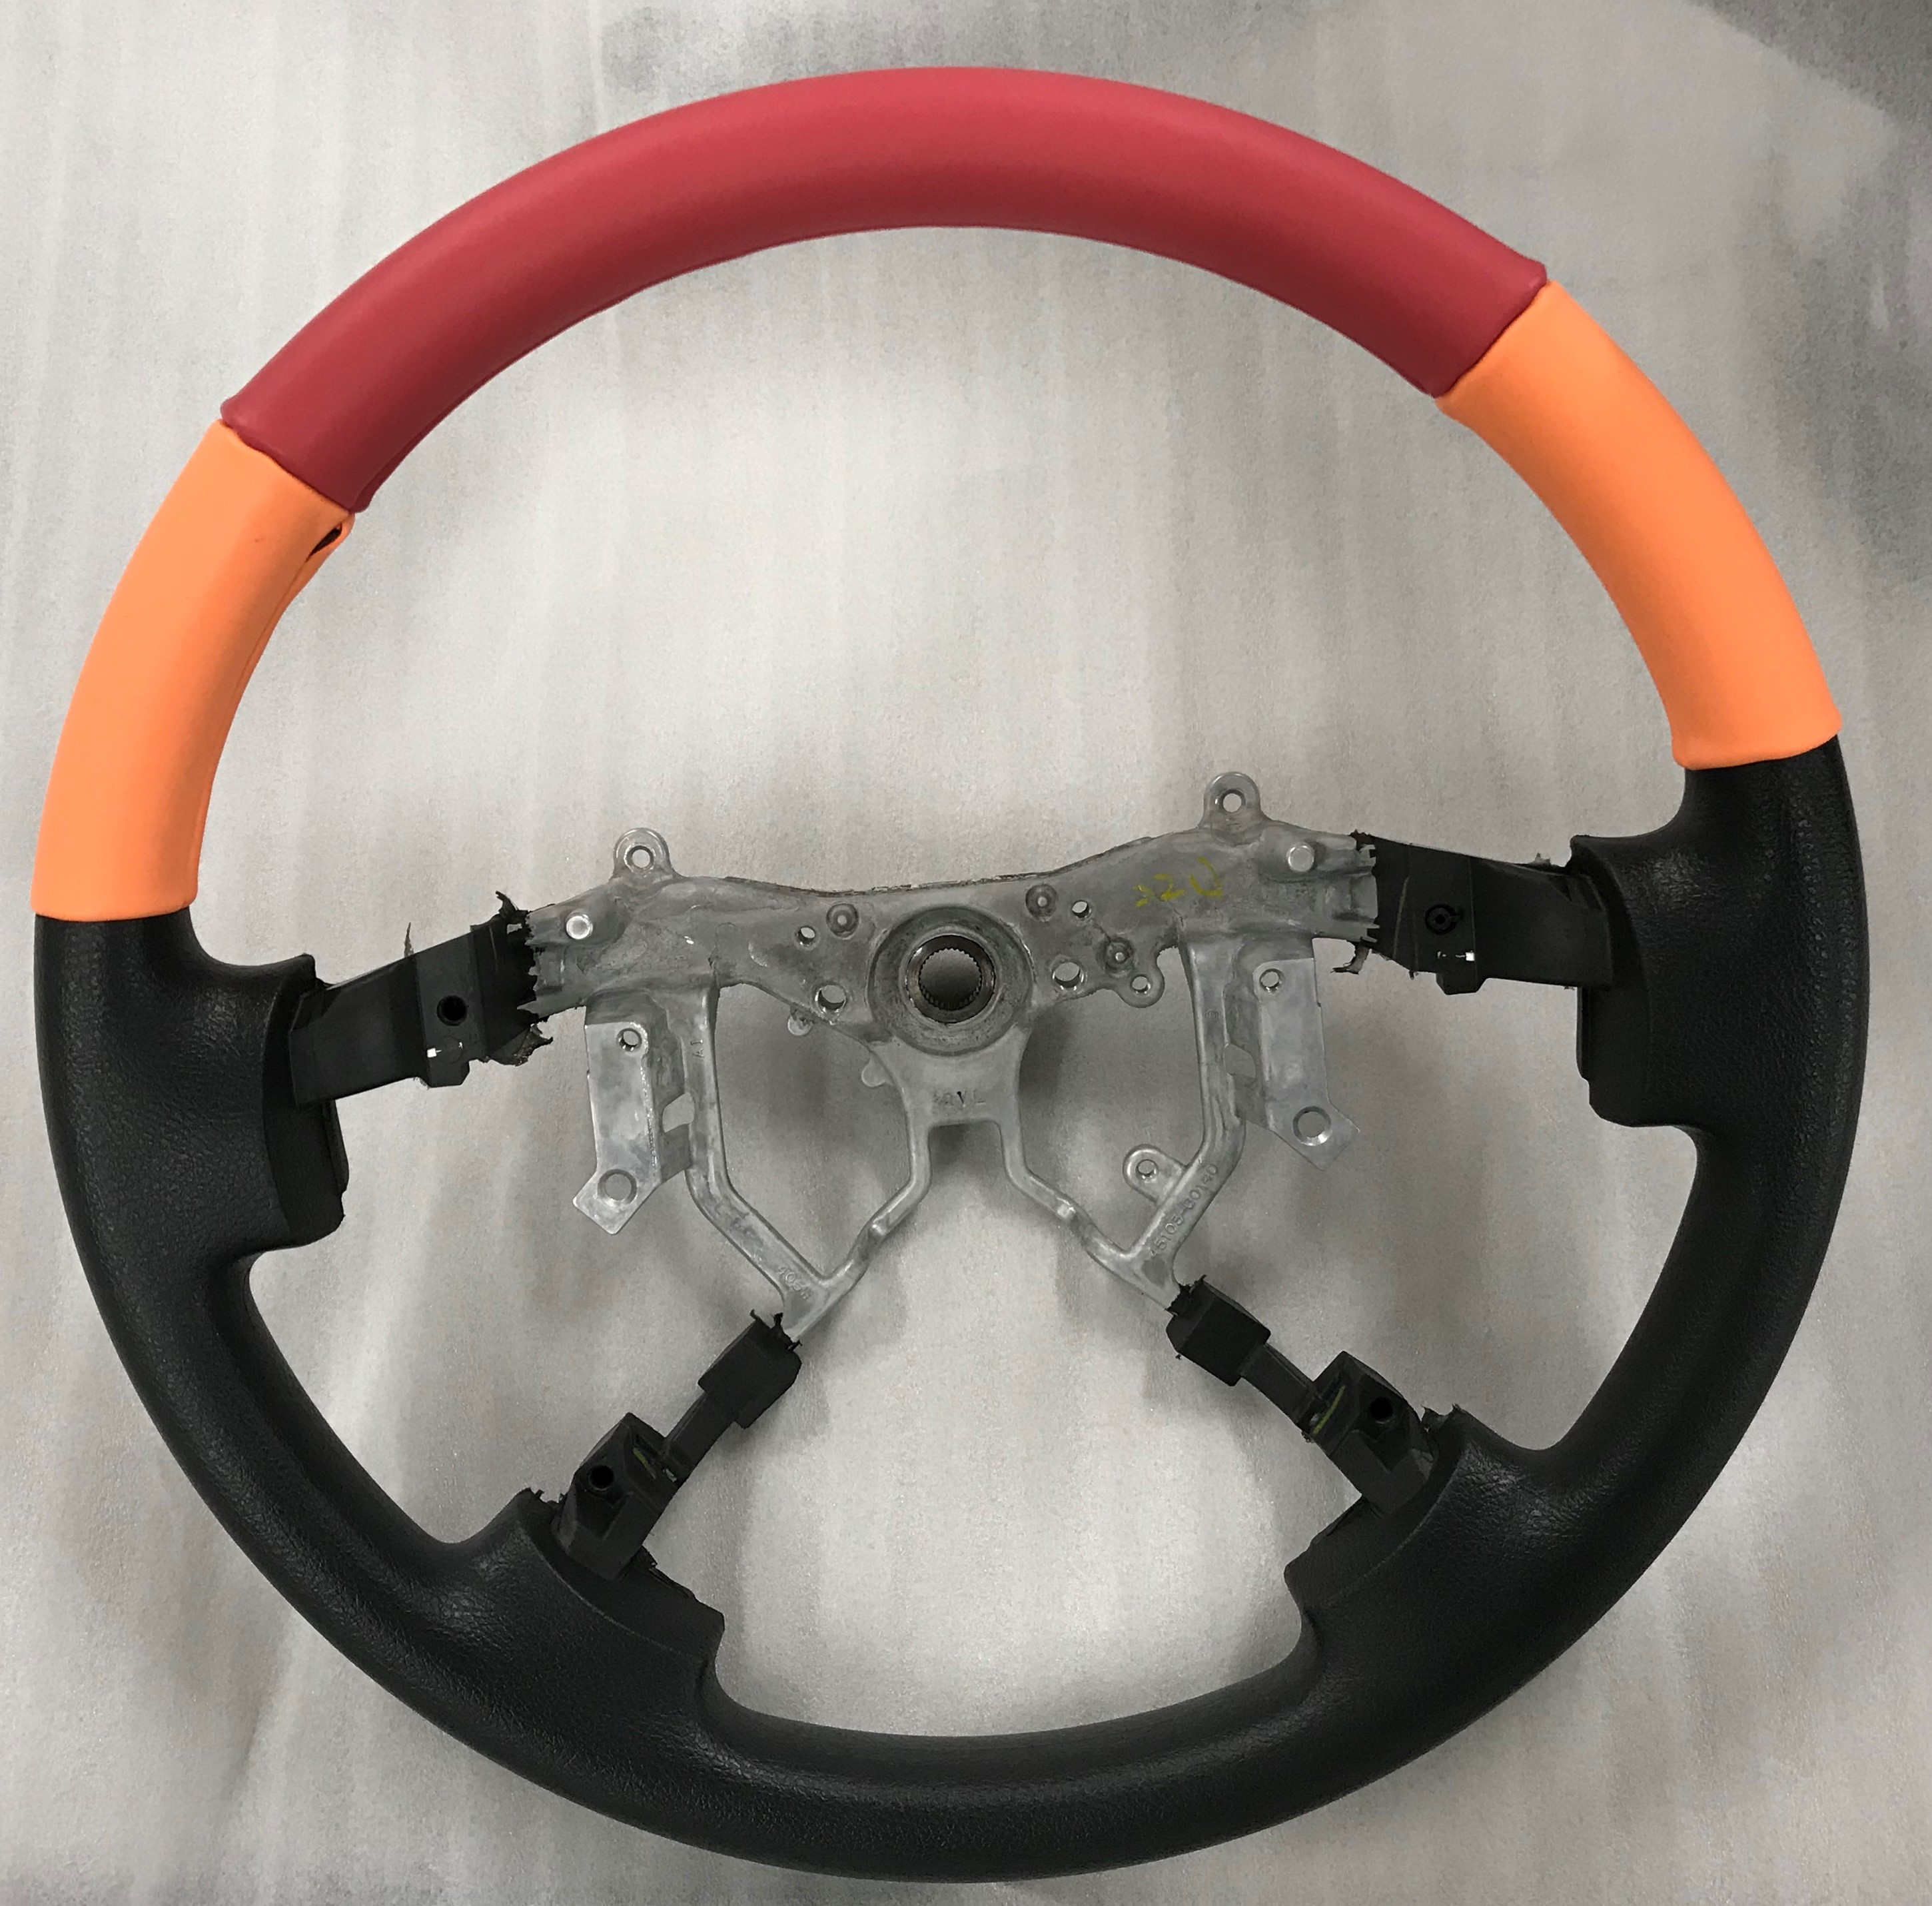 Prototype of a colored fluoroelastomer steering wheel cover